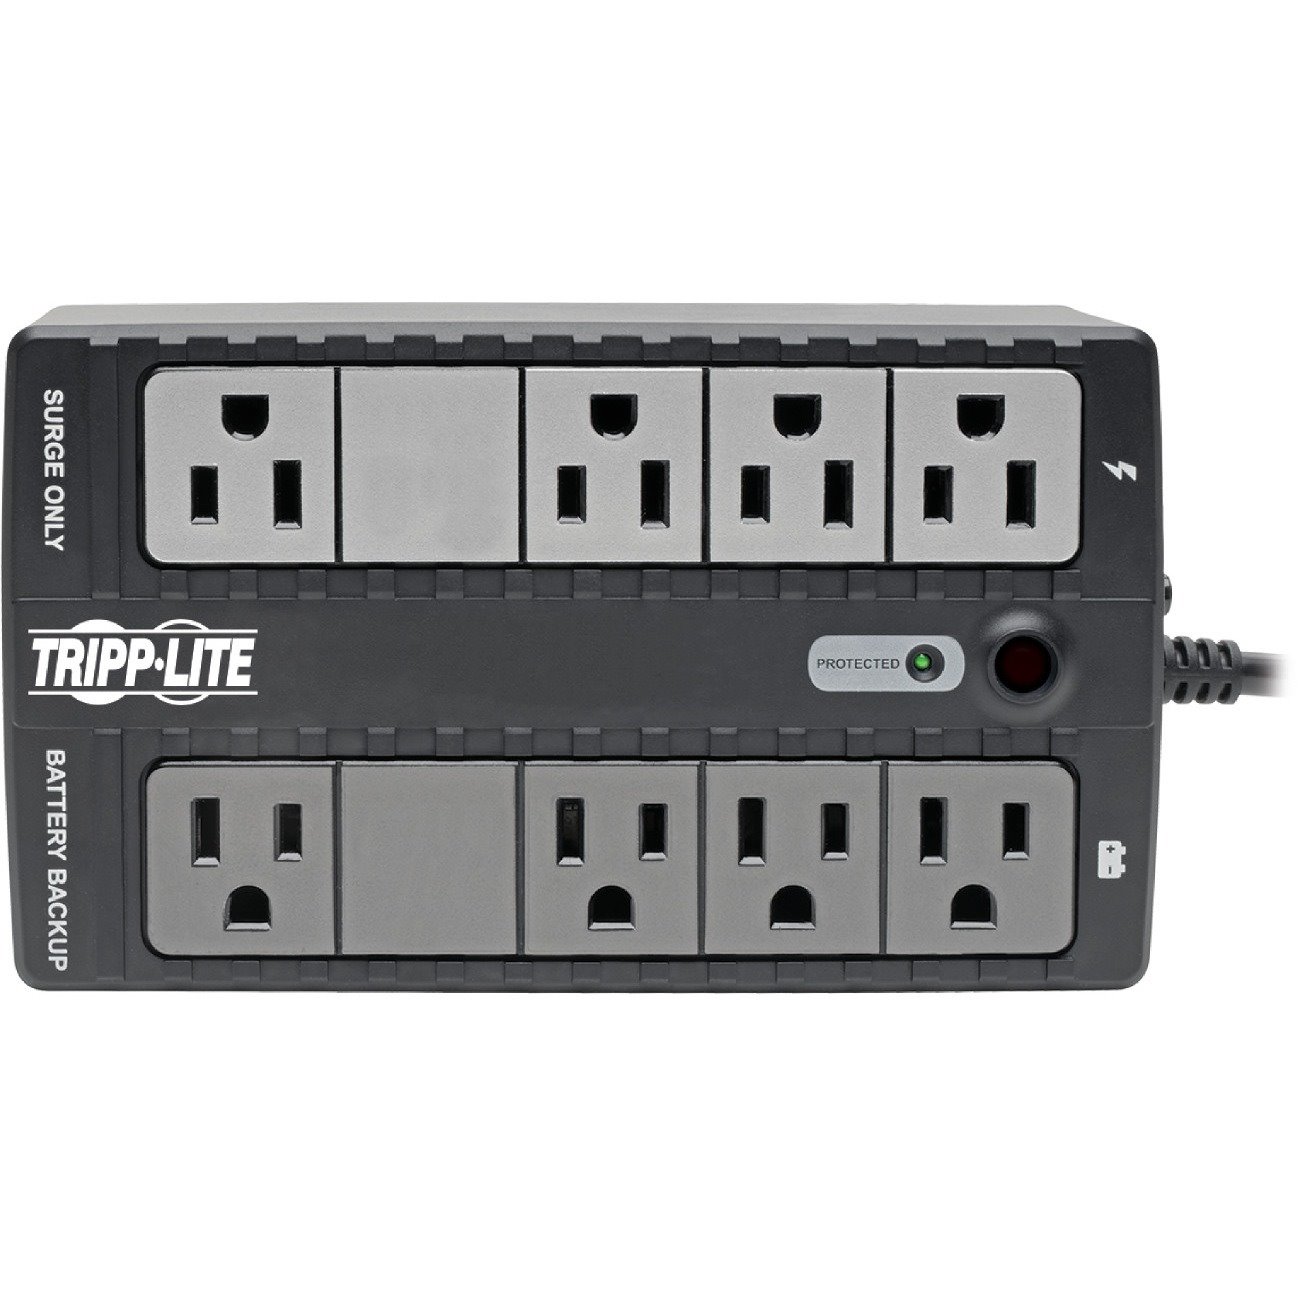 Tripp Lite by Eaton Standby UPS 450VA 255W - 8 5-15R Outlets, 120V, 50/60 Hz, 5-15P Plug, Desktop/Wall Mount - Battery Backup